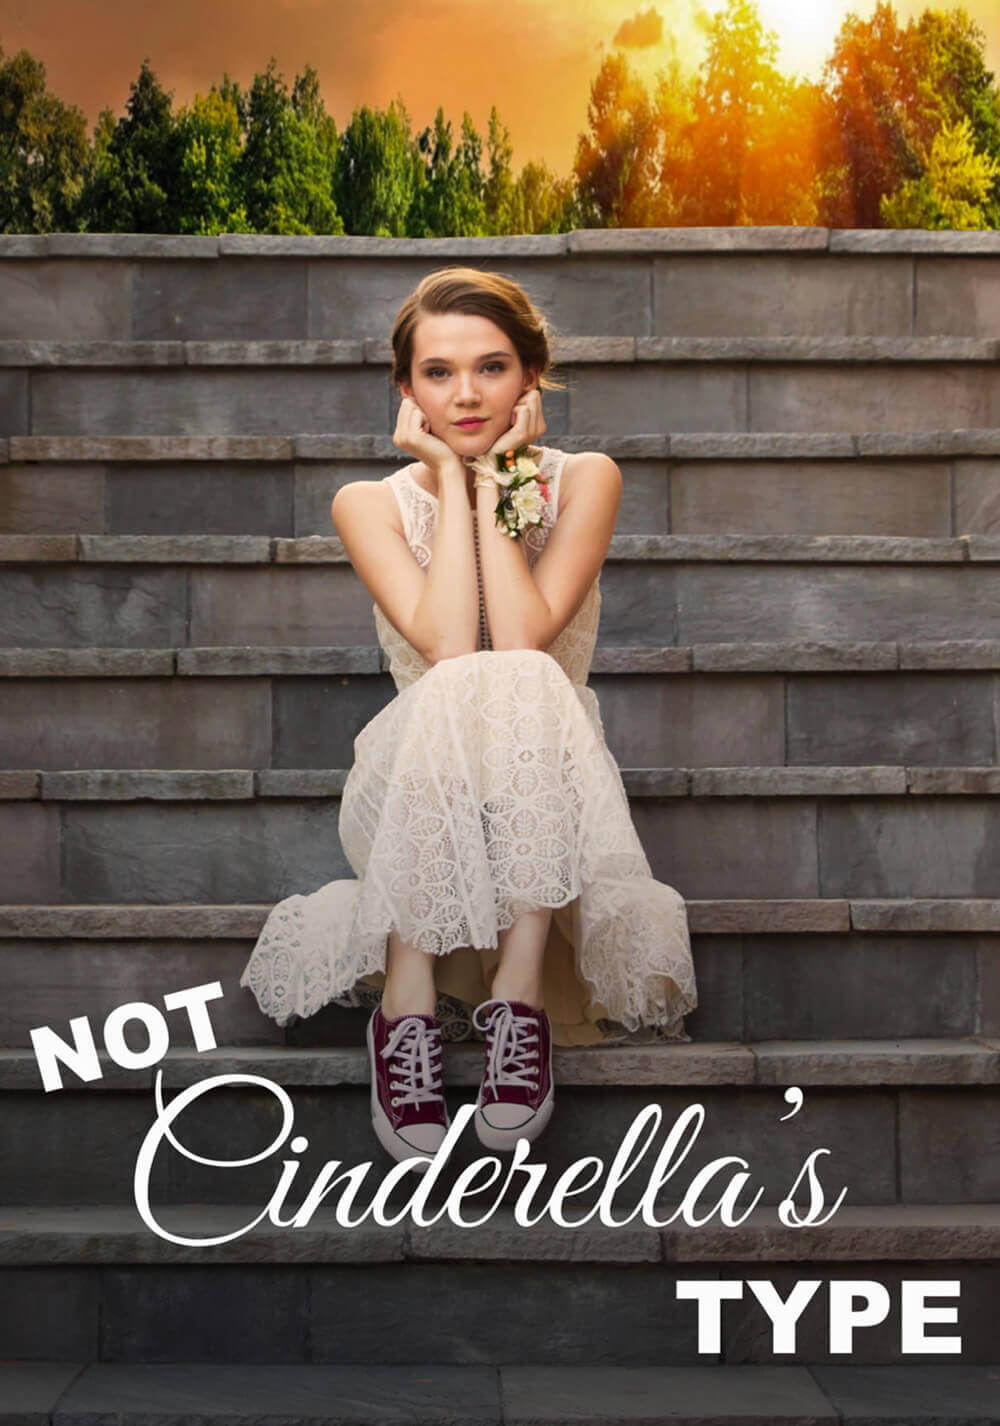 نه مثل سیندرلا (Not Cinderella’s Type)